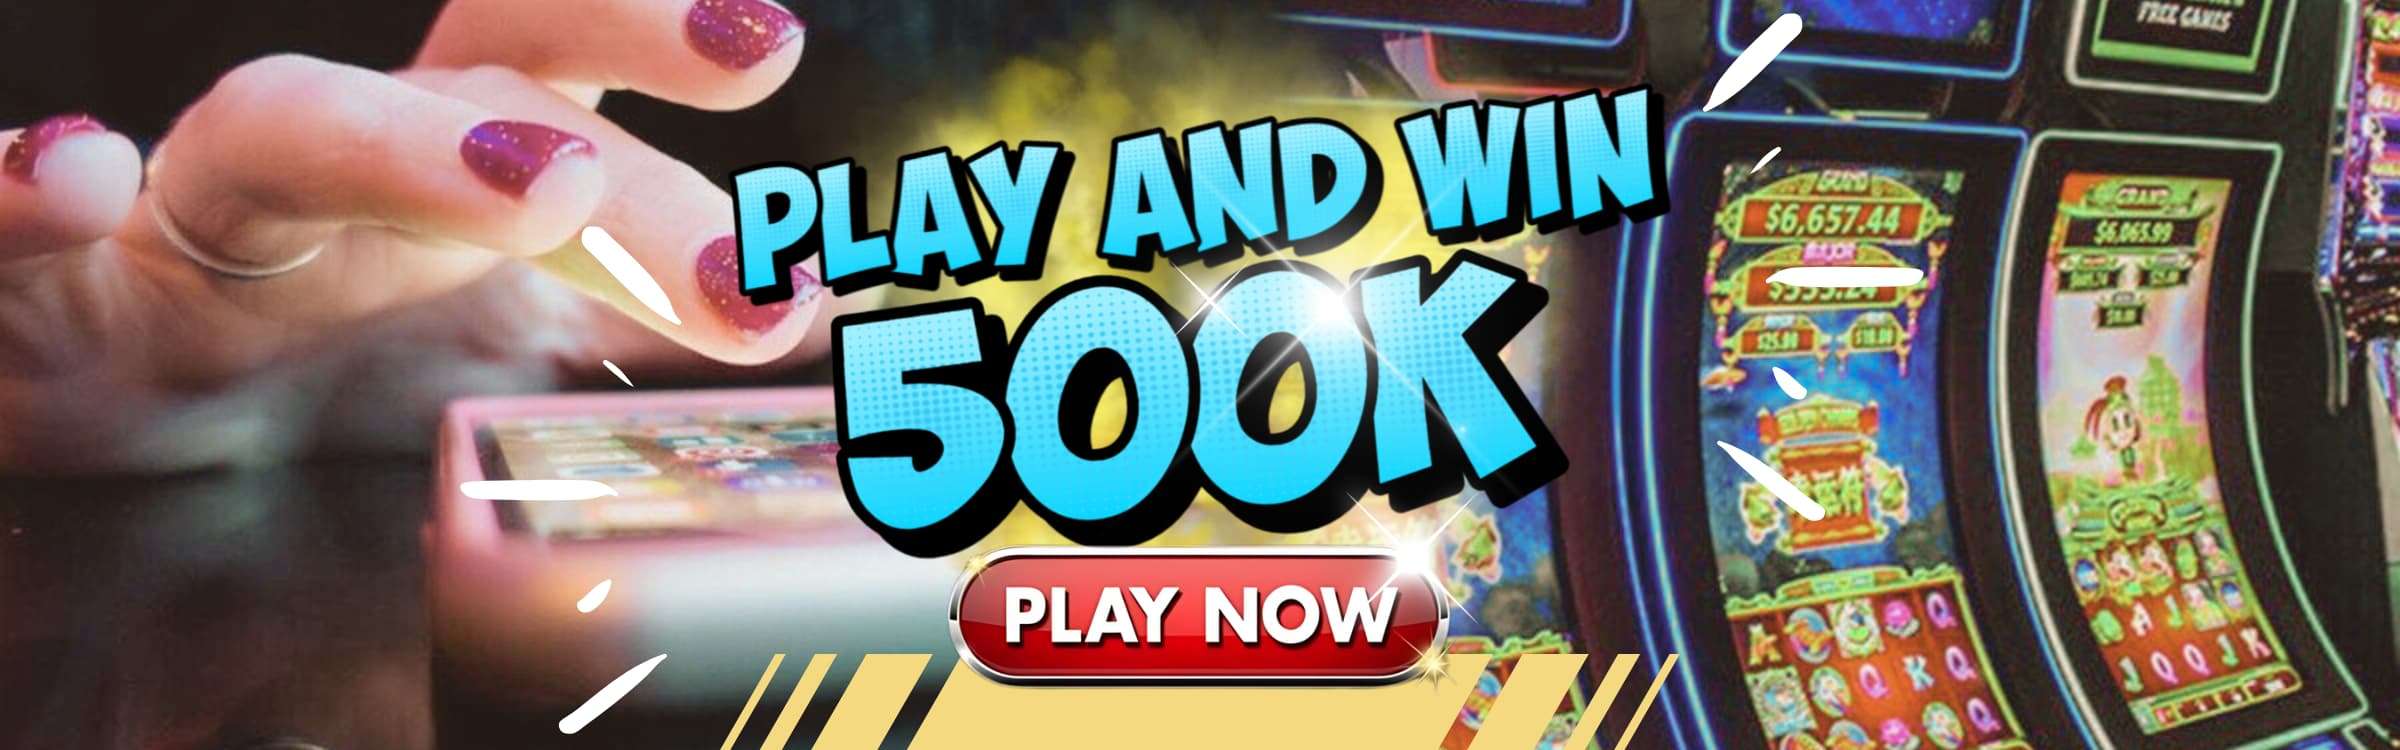 play to win App Bonus-500K-777KPL Deposit